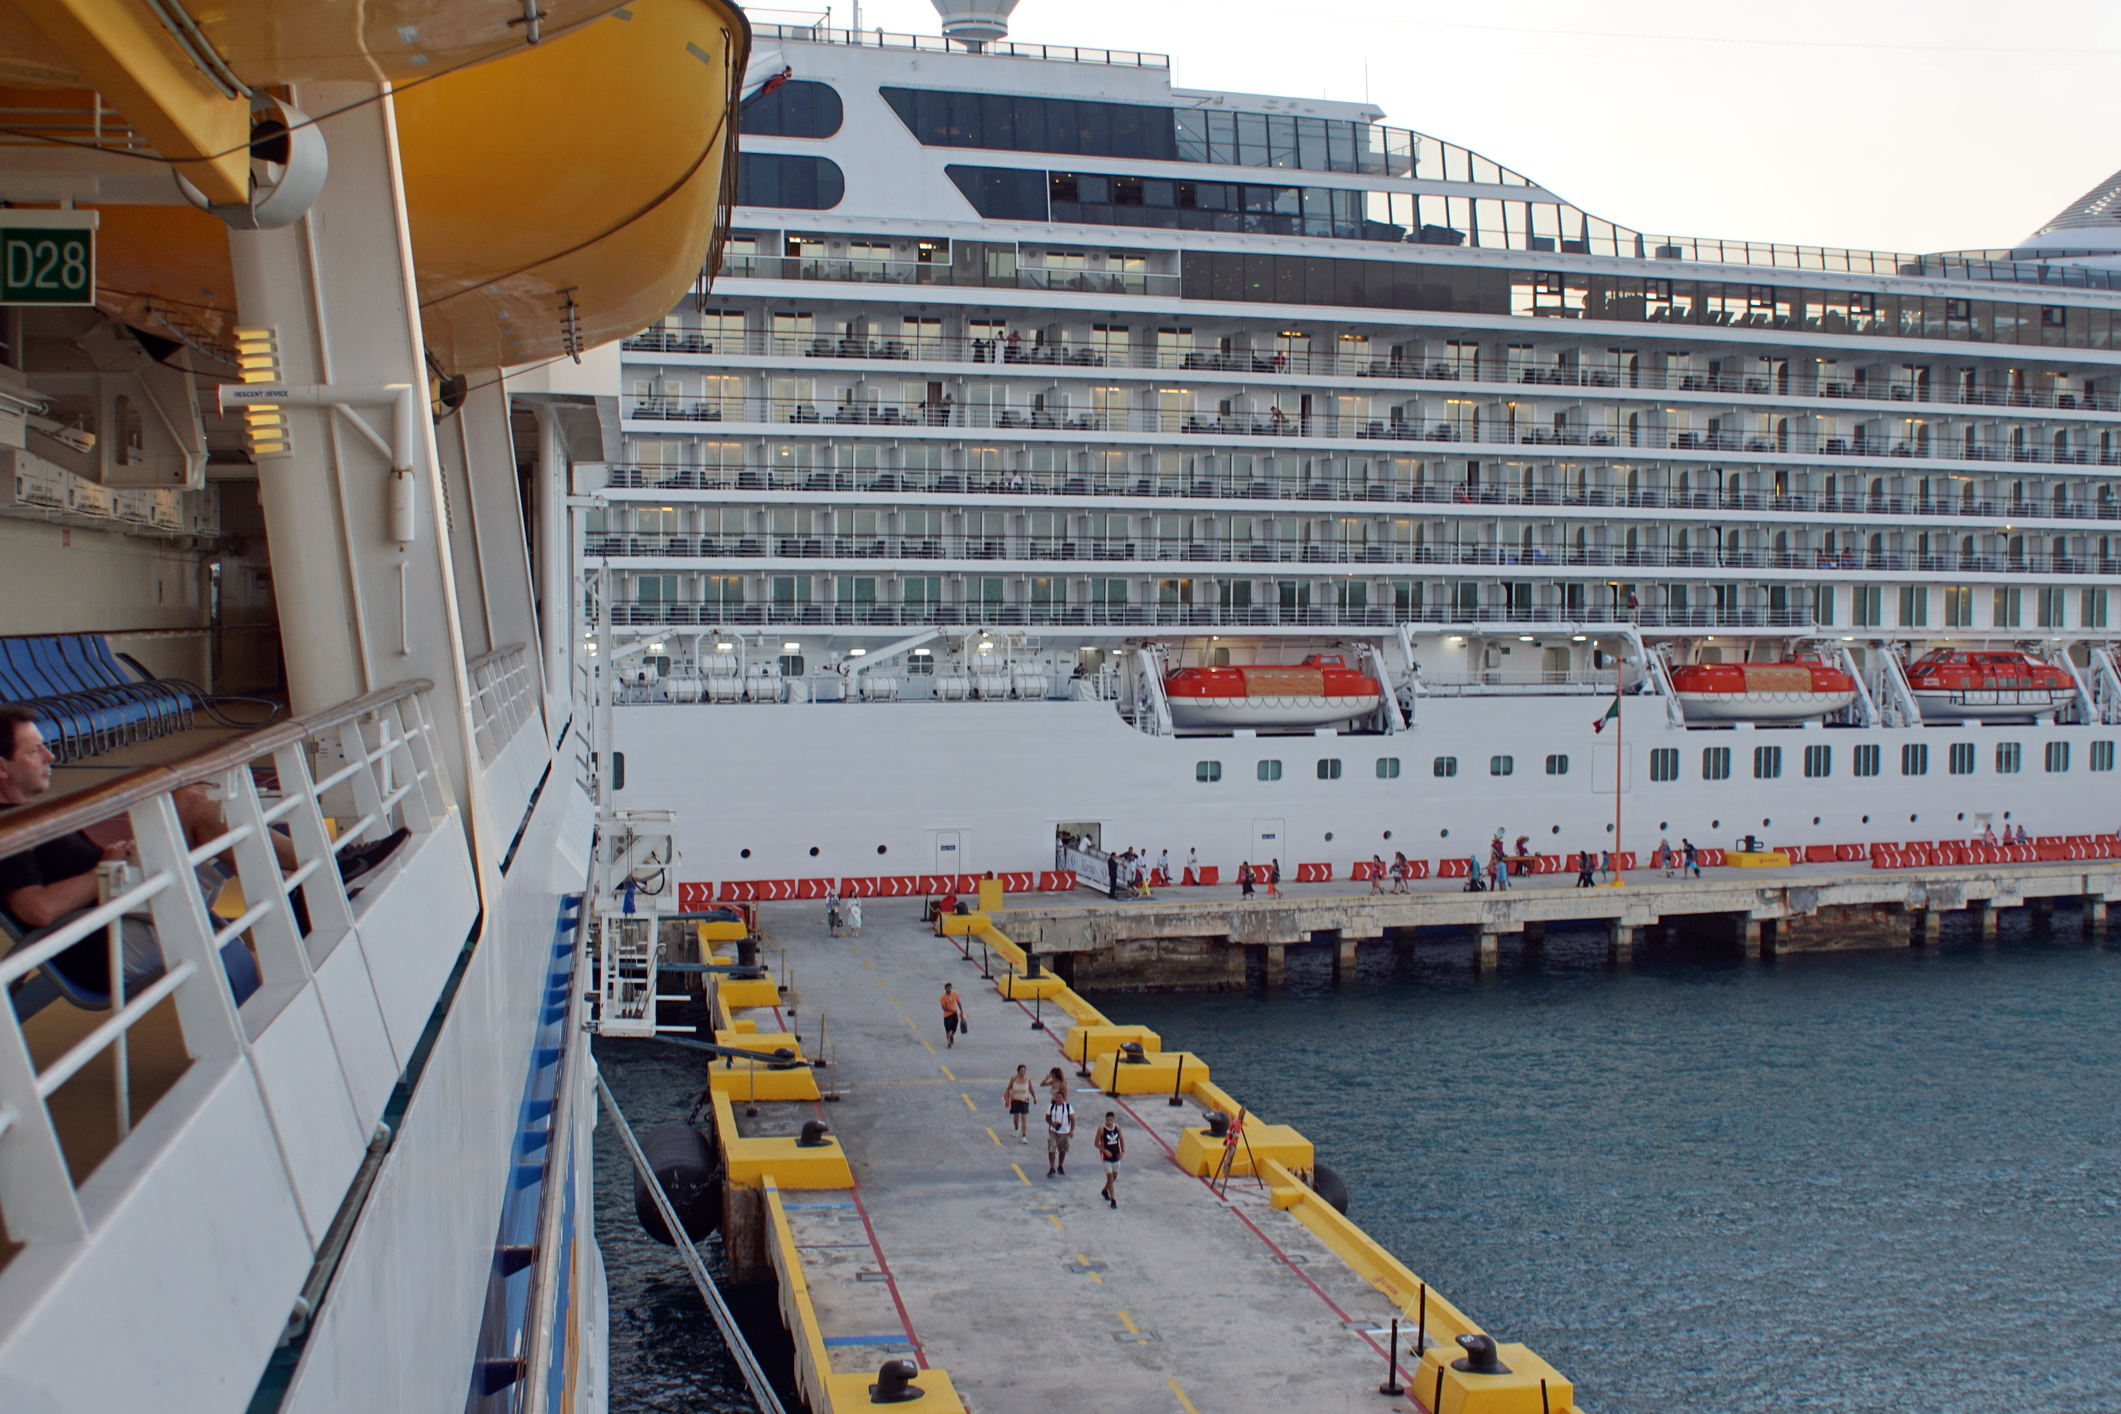 Passengers boarding a cruise ship